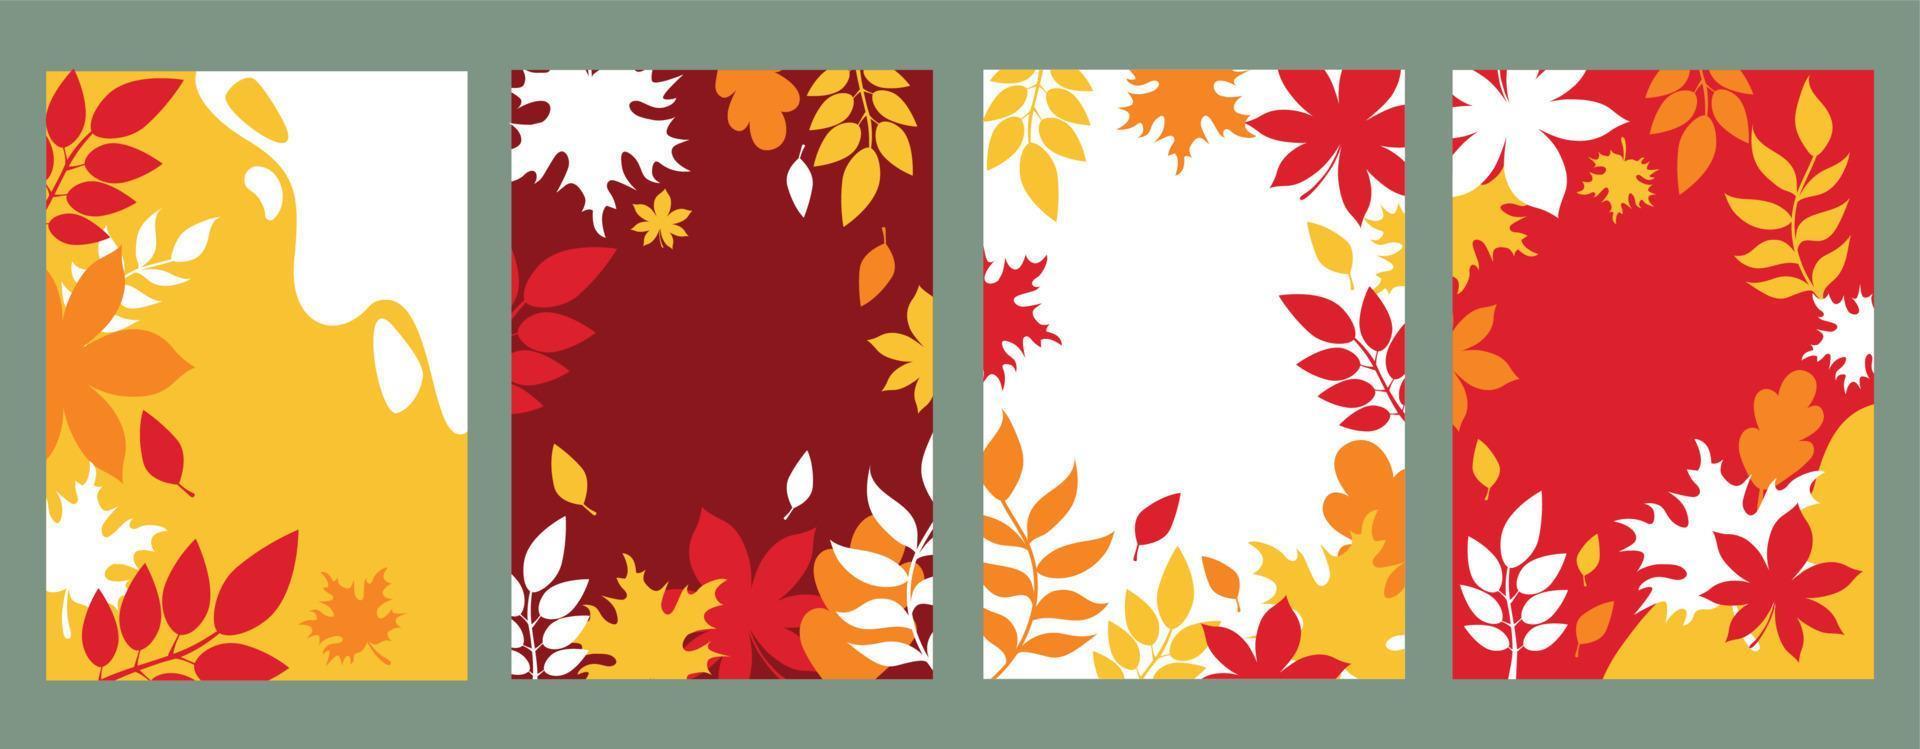 Plantillas de arte otoño genéricas de moda abstractas. Adecuado para portada,  banner web, cartel, folleto, cartel, postal - vector 3485041 Vector en  Vecteezy